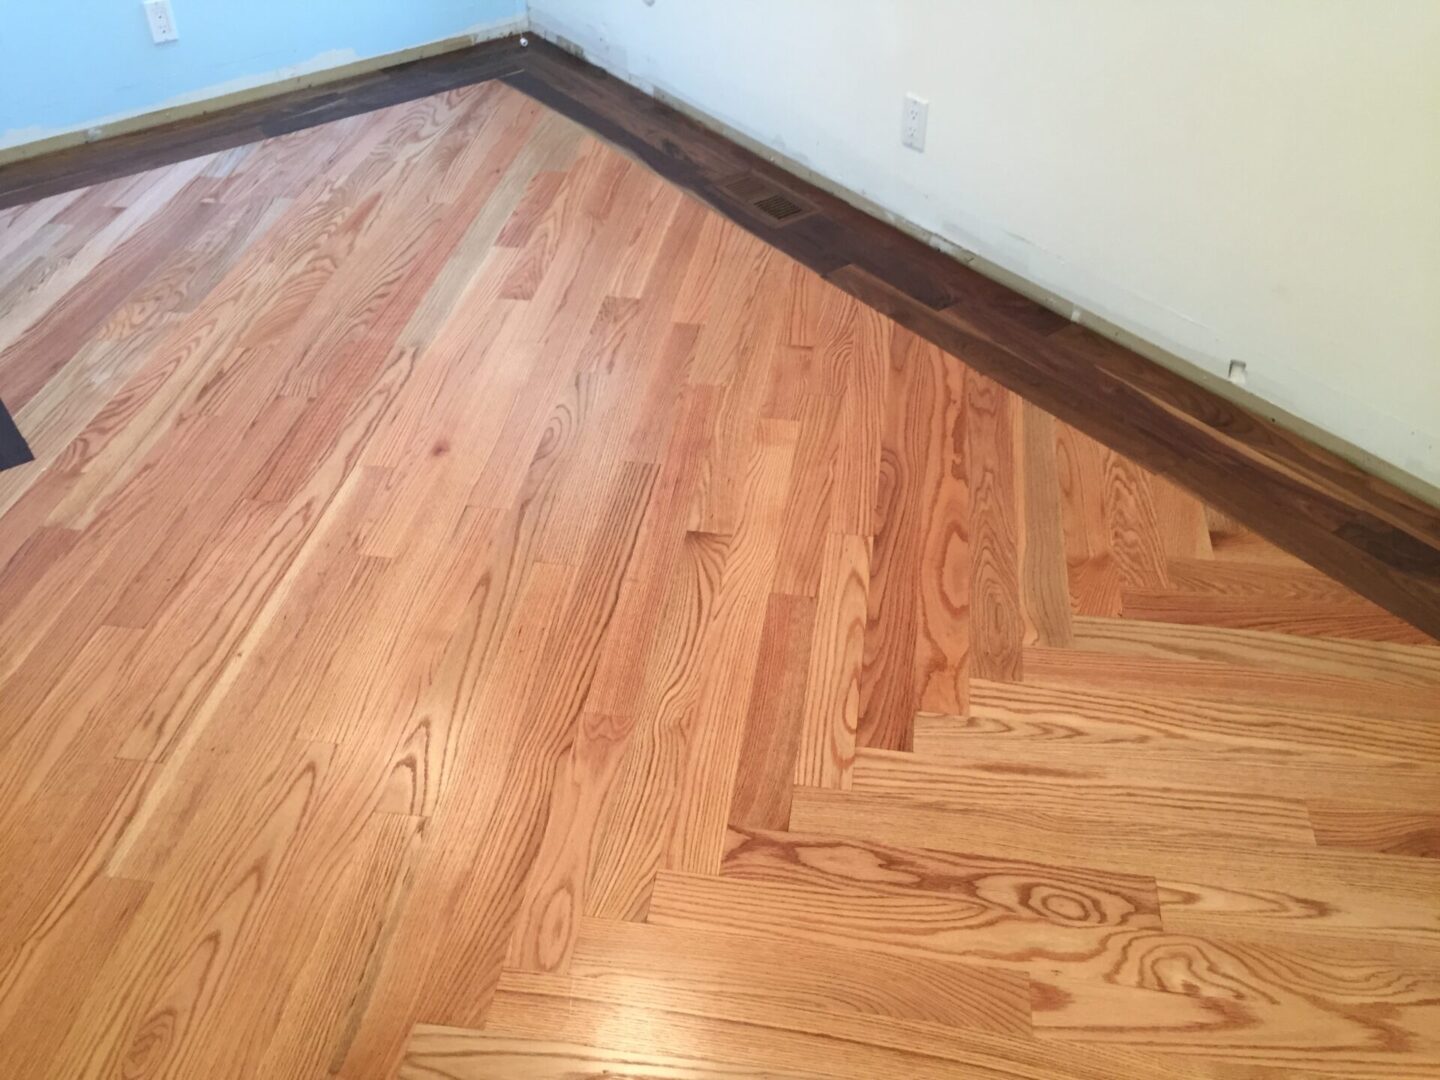 Red oak floor with walnut border